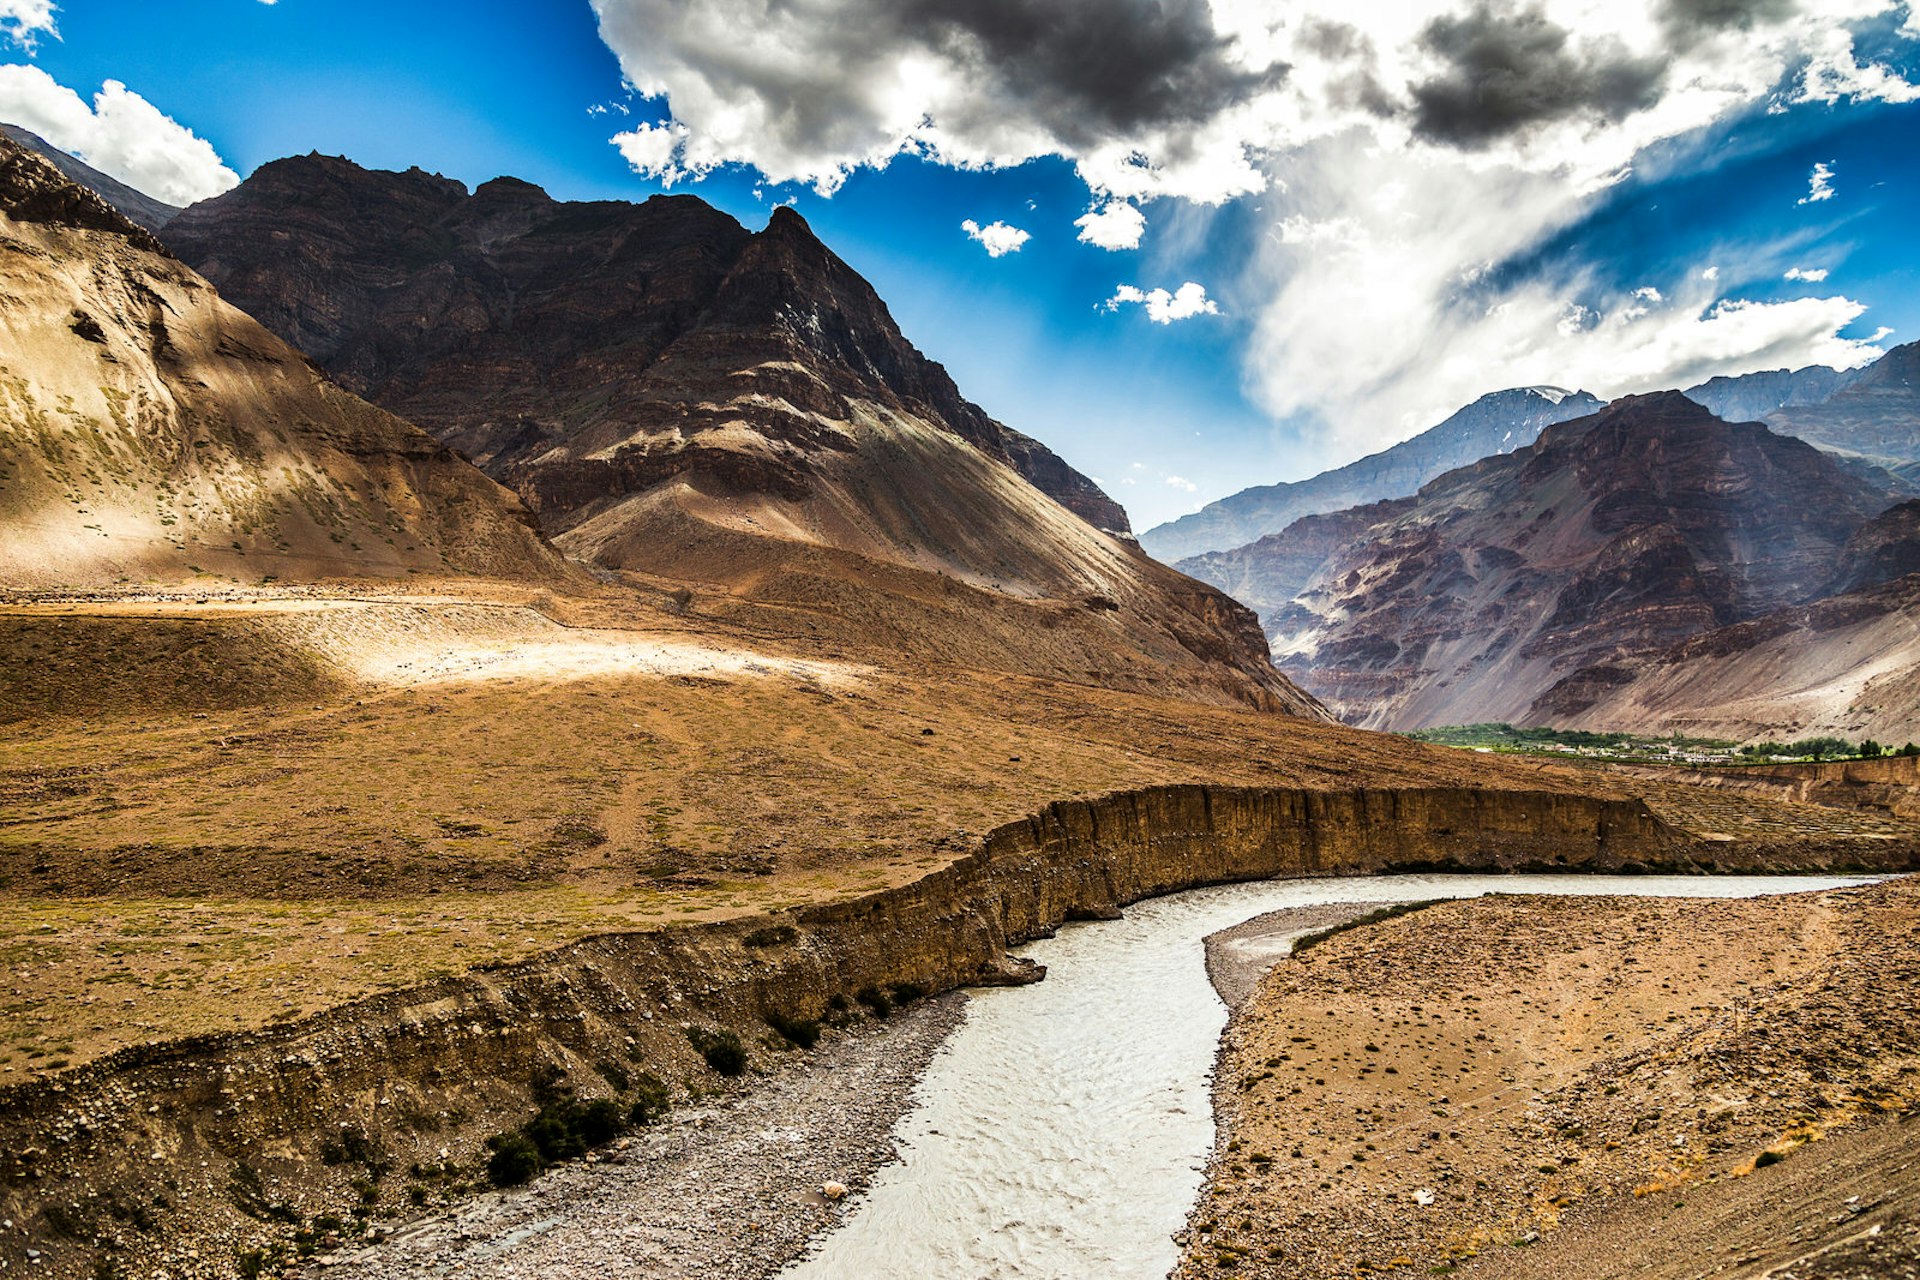 The Spiti River twisting through a desert landscape in Himachal Pradesh